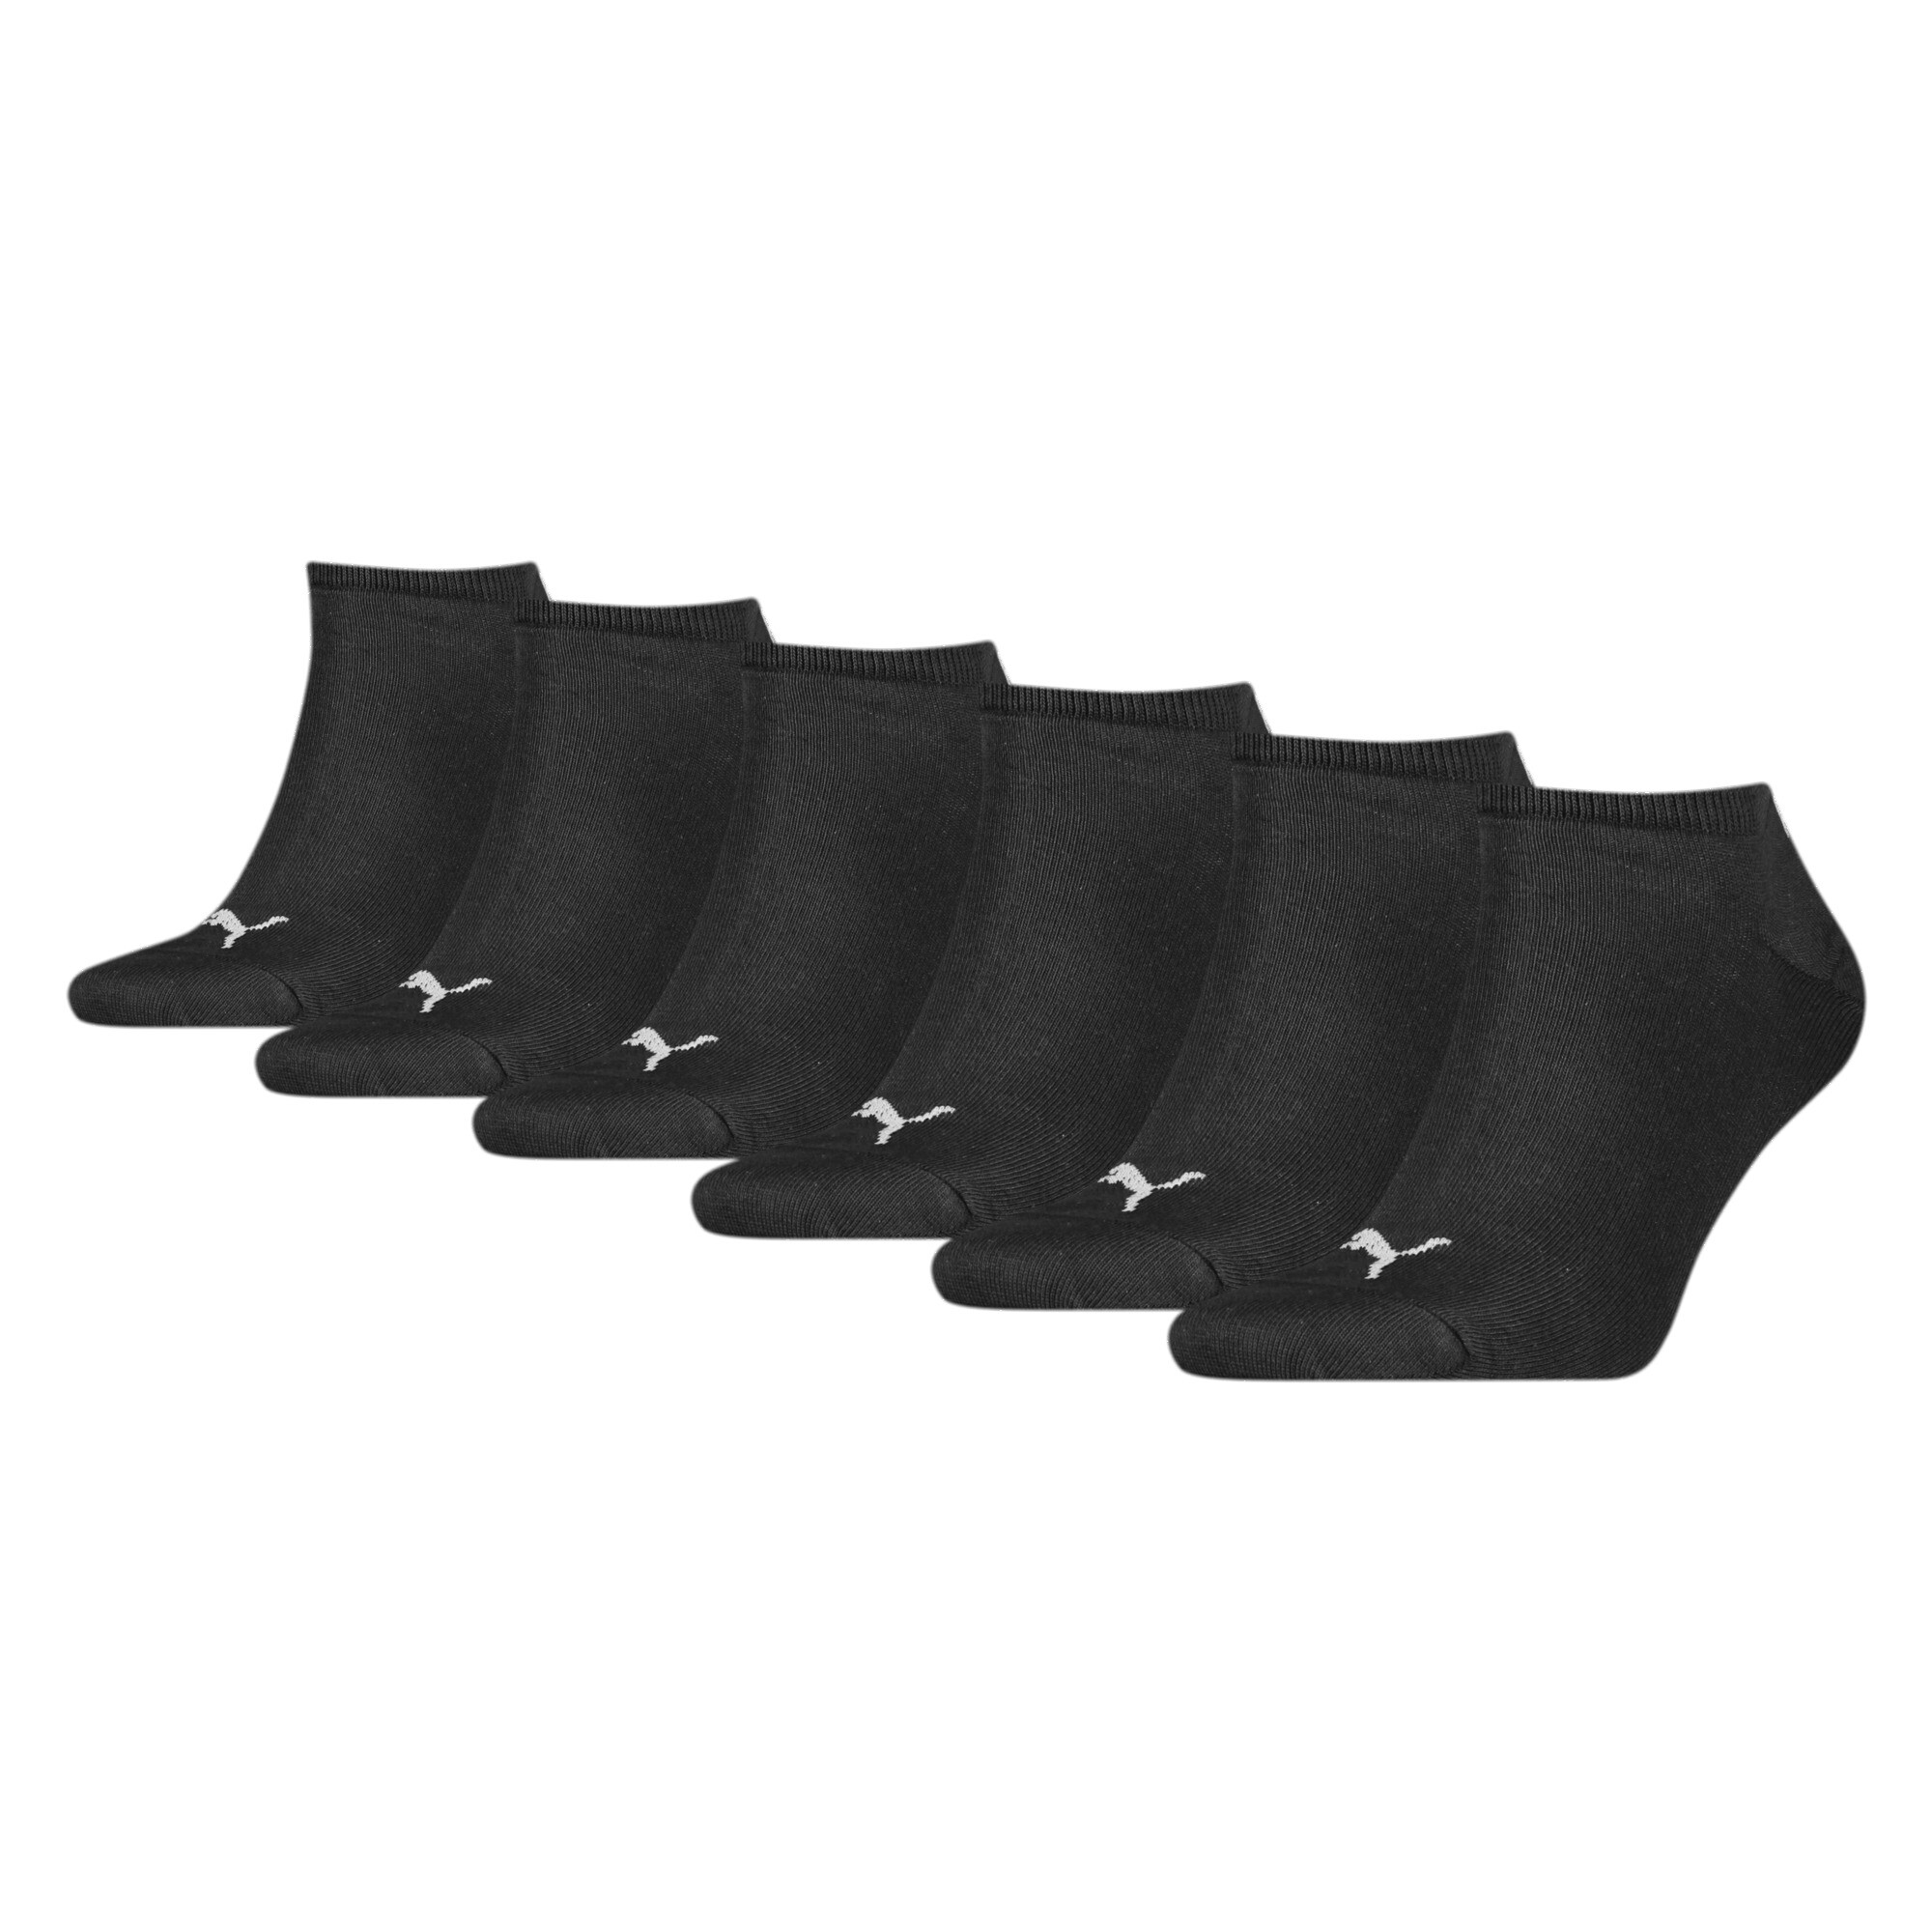 Puma Unisex Sneaker Socks 6 Pack, Black, Size 43-46, Clothing